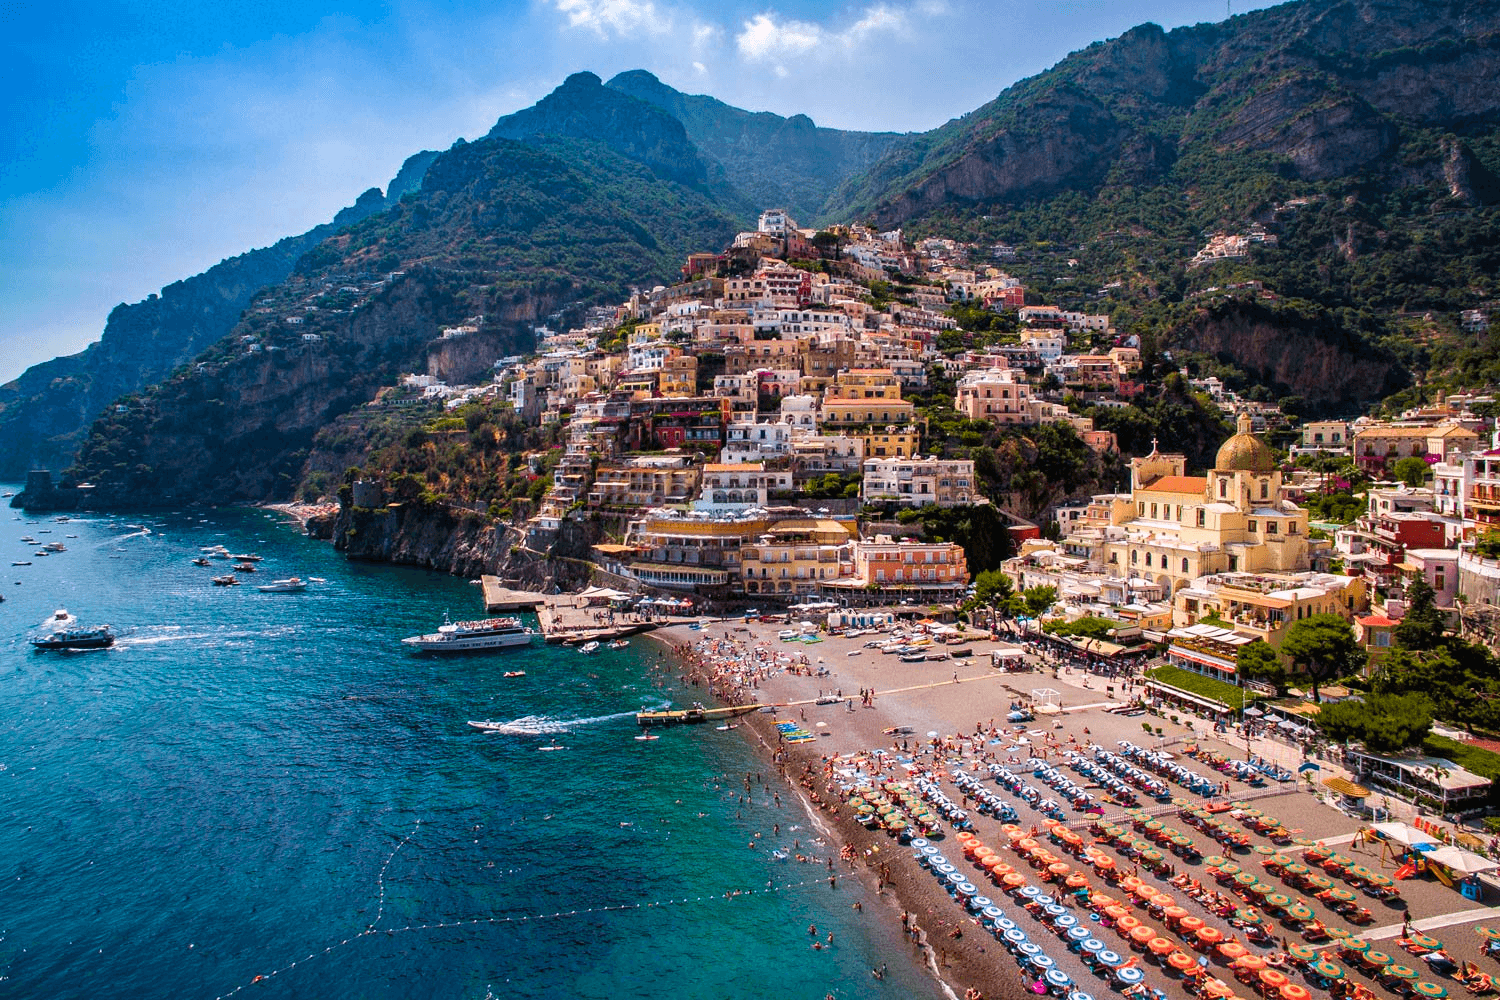 Source: Simply Amalfi Coast